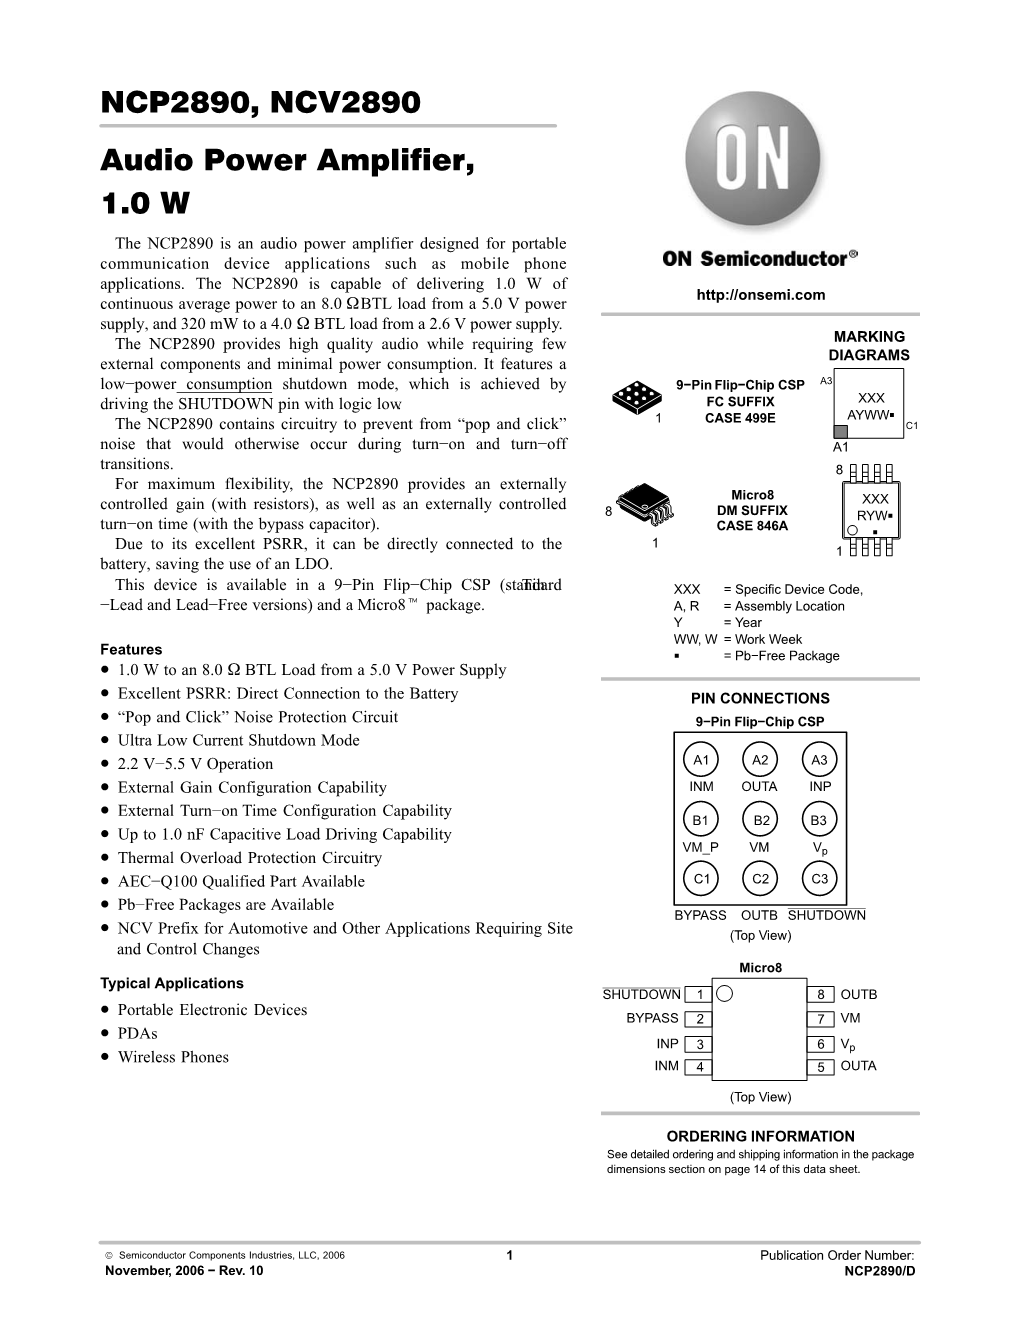 NCP2890, NCV2890 Audio Power Amplifier, 1.0 W